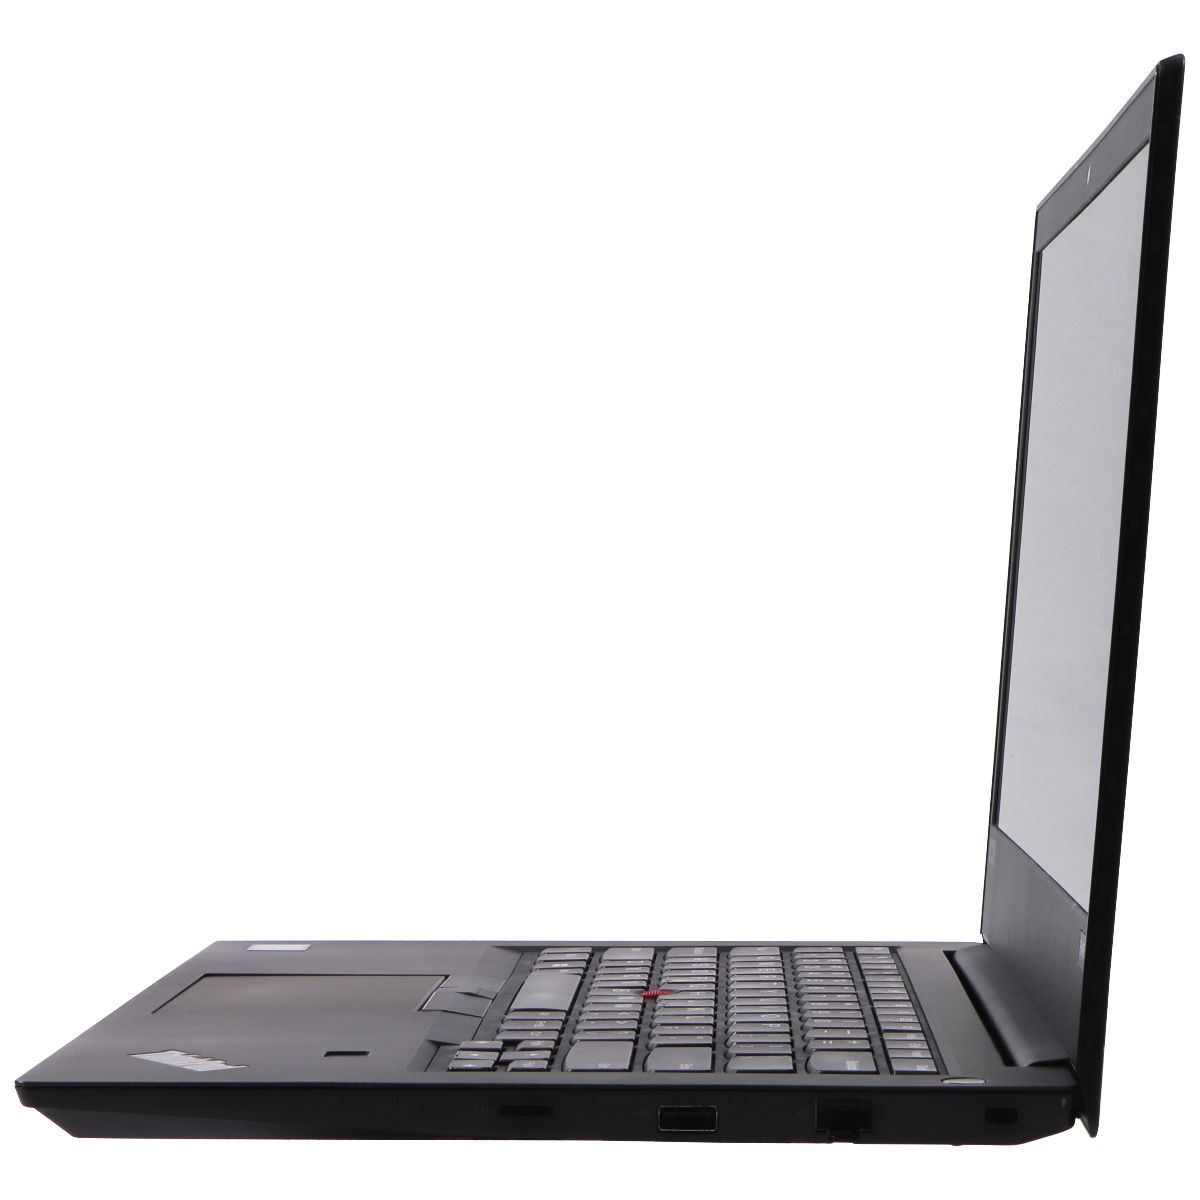 Lenovo ThinkPad E480 (14-in) FHD Laptop (20KN) i5-8250U/256GB/8GB/10 Pro Laptops - PC Laptops & Netbooks Lenovo    - Simple Cell Bulk Wholesale Pricing - USA Seller